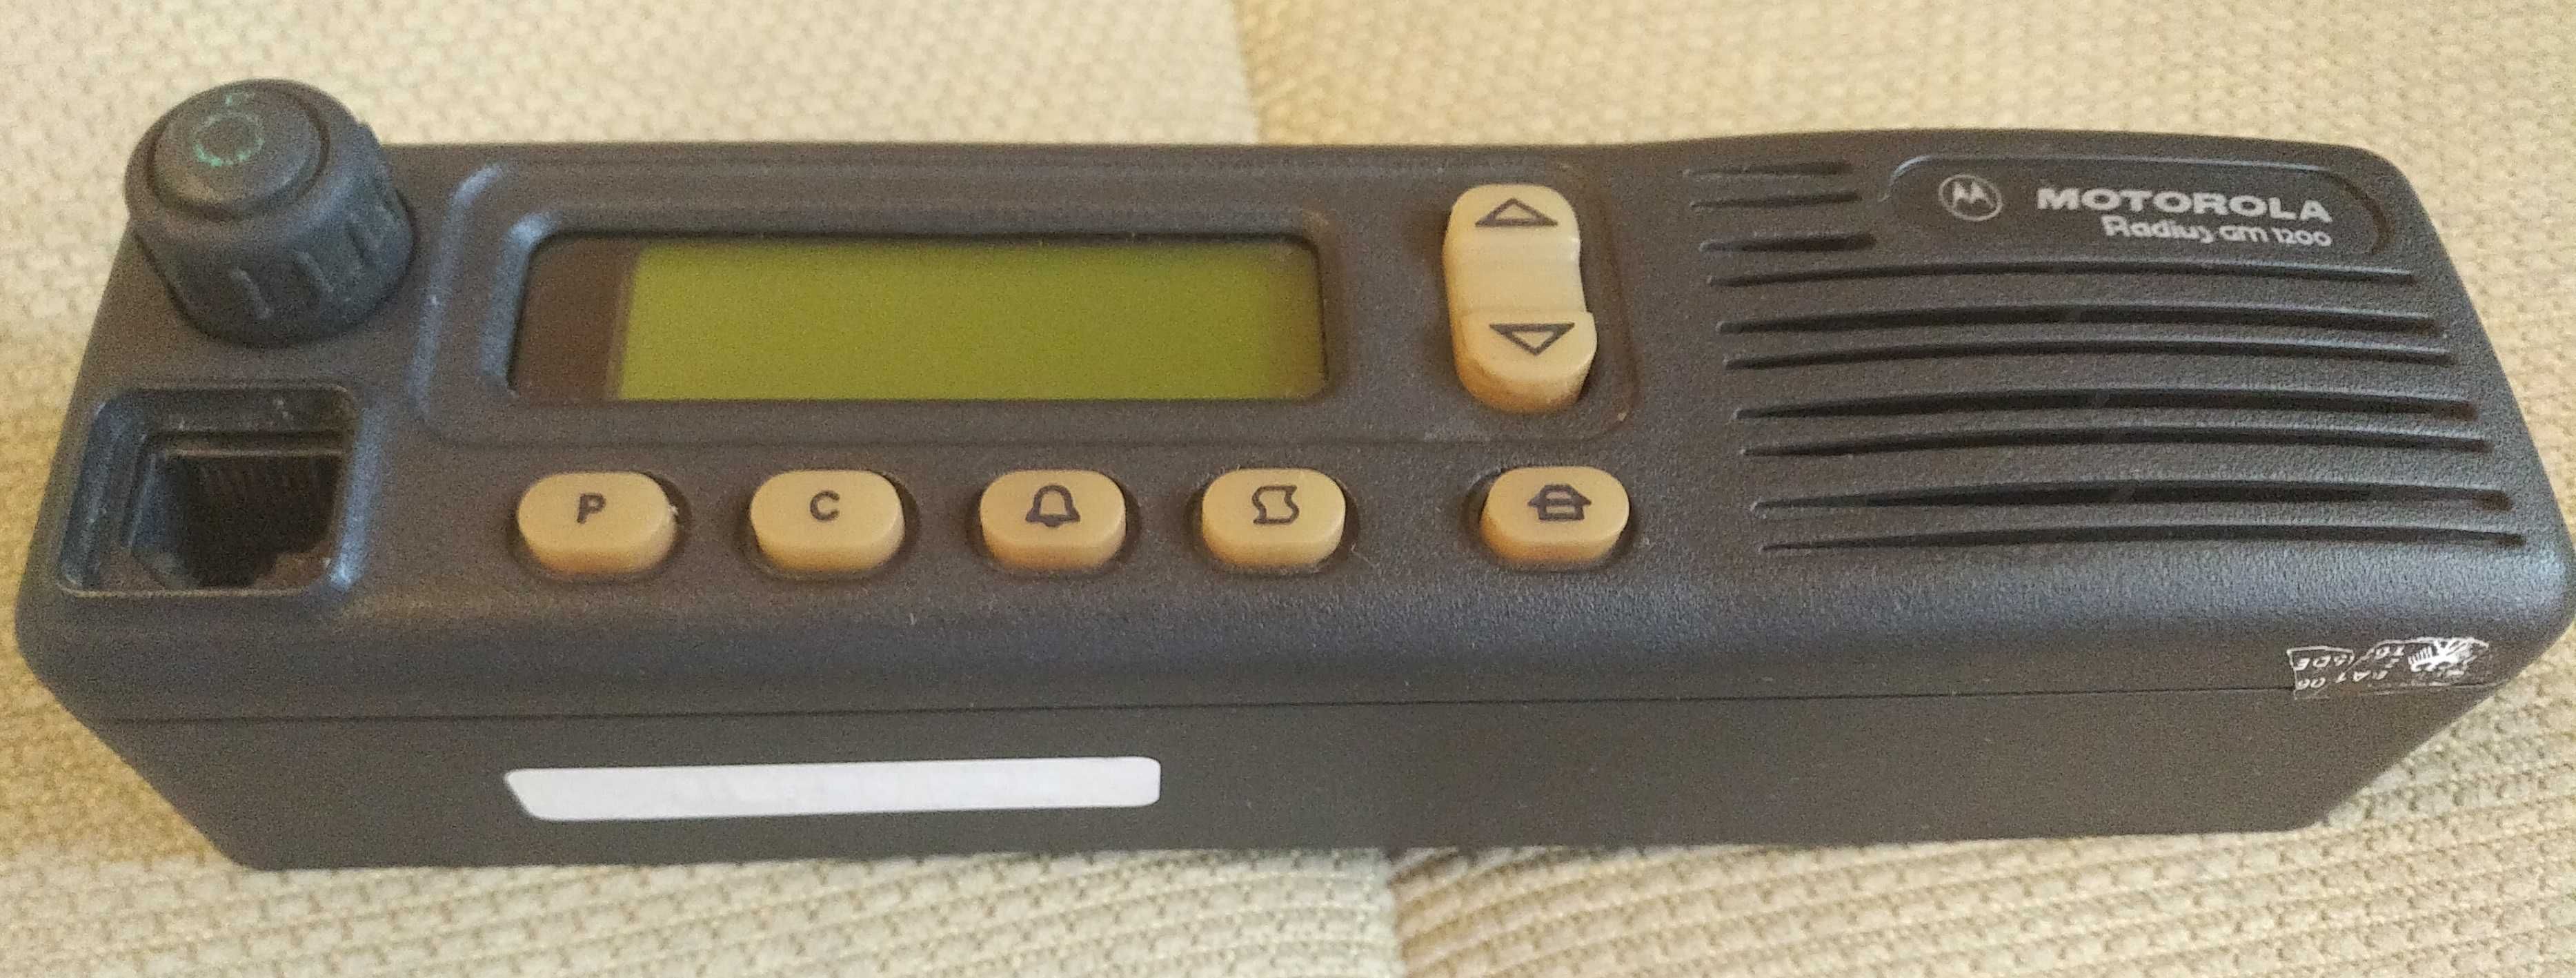 Motorola Radius gm-1200 контролен панел /за резервни части /